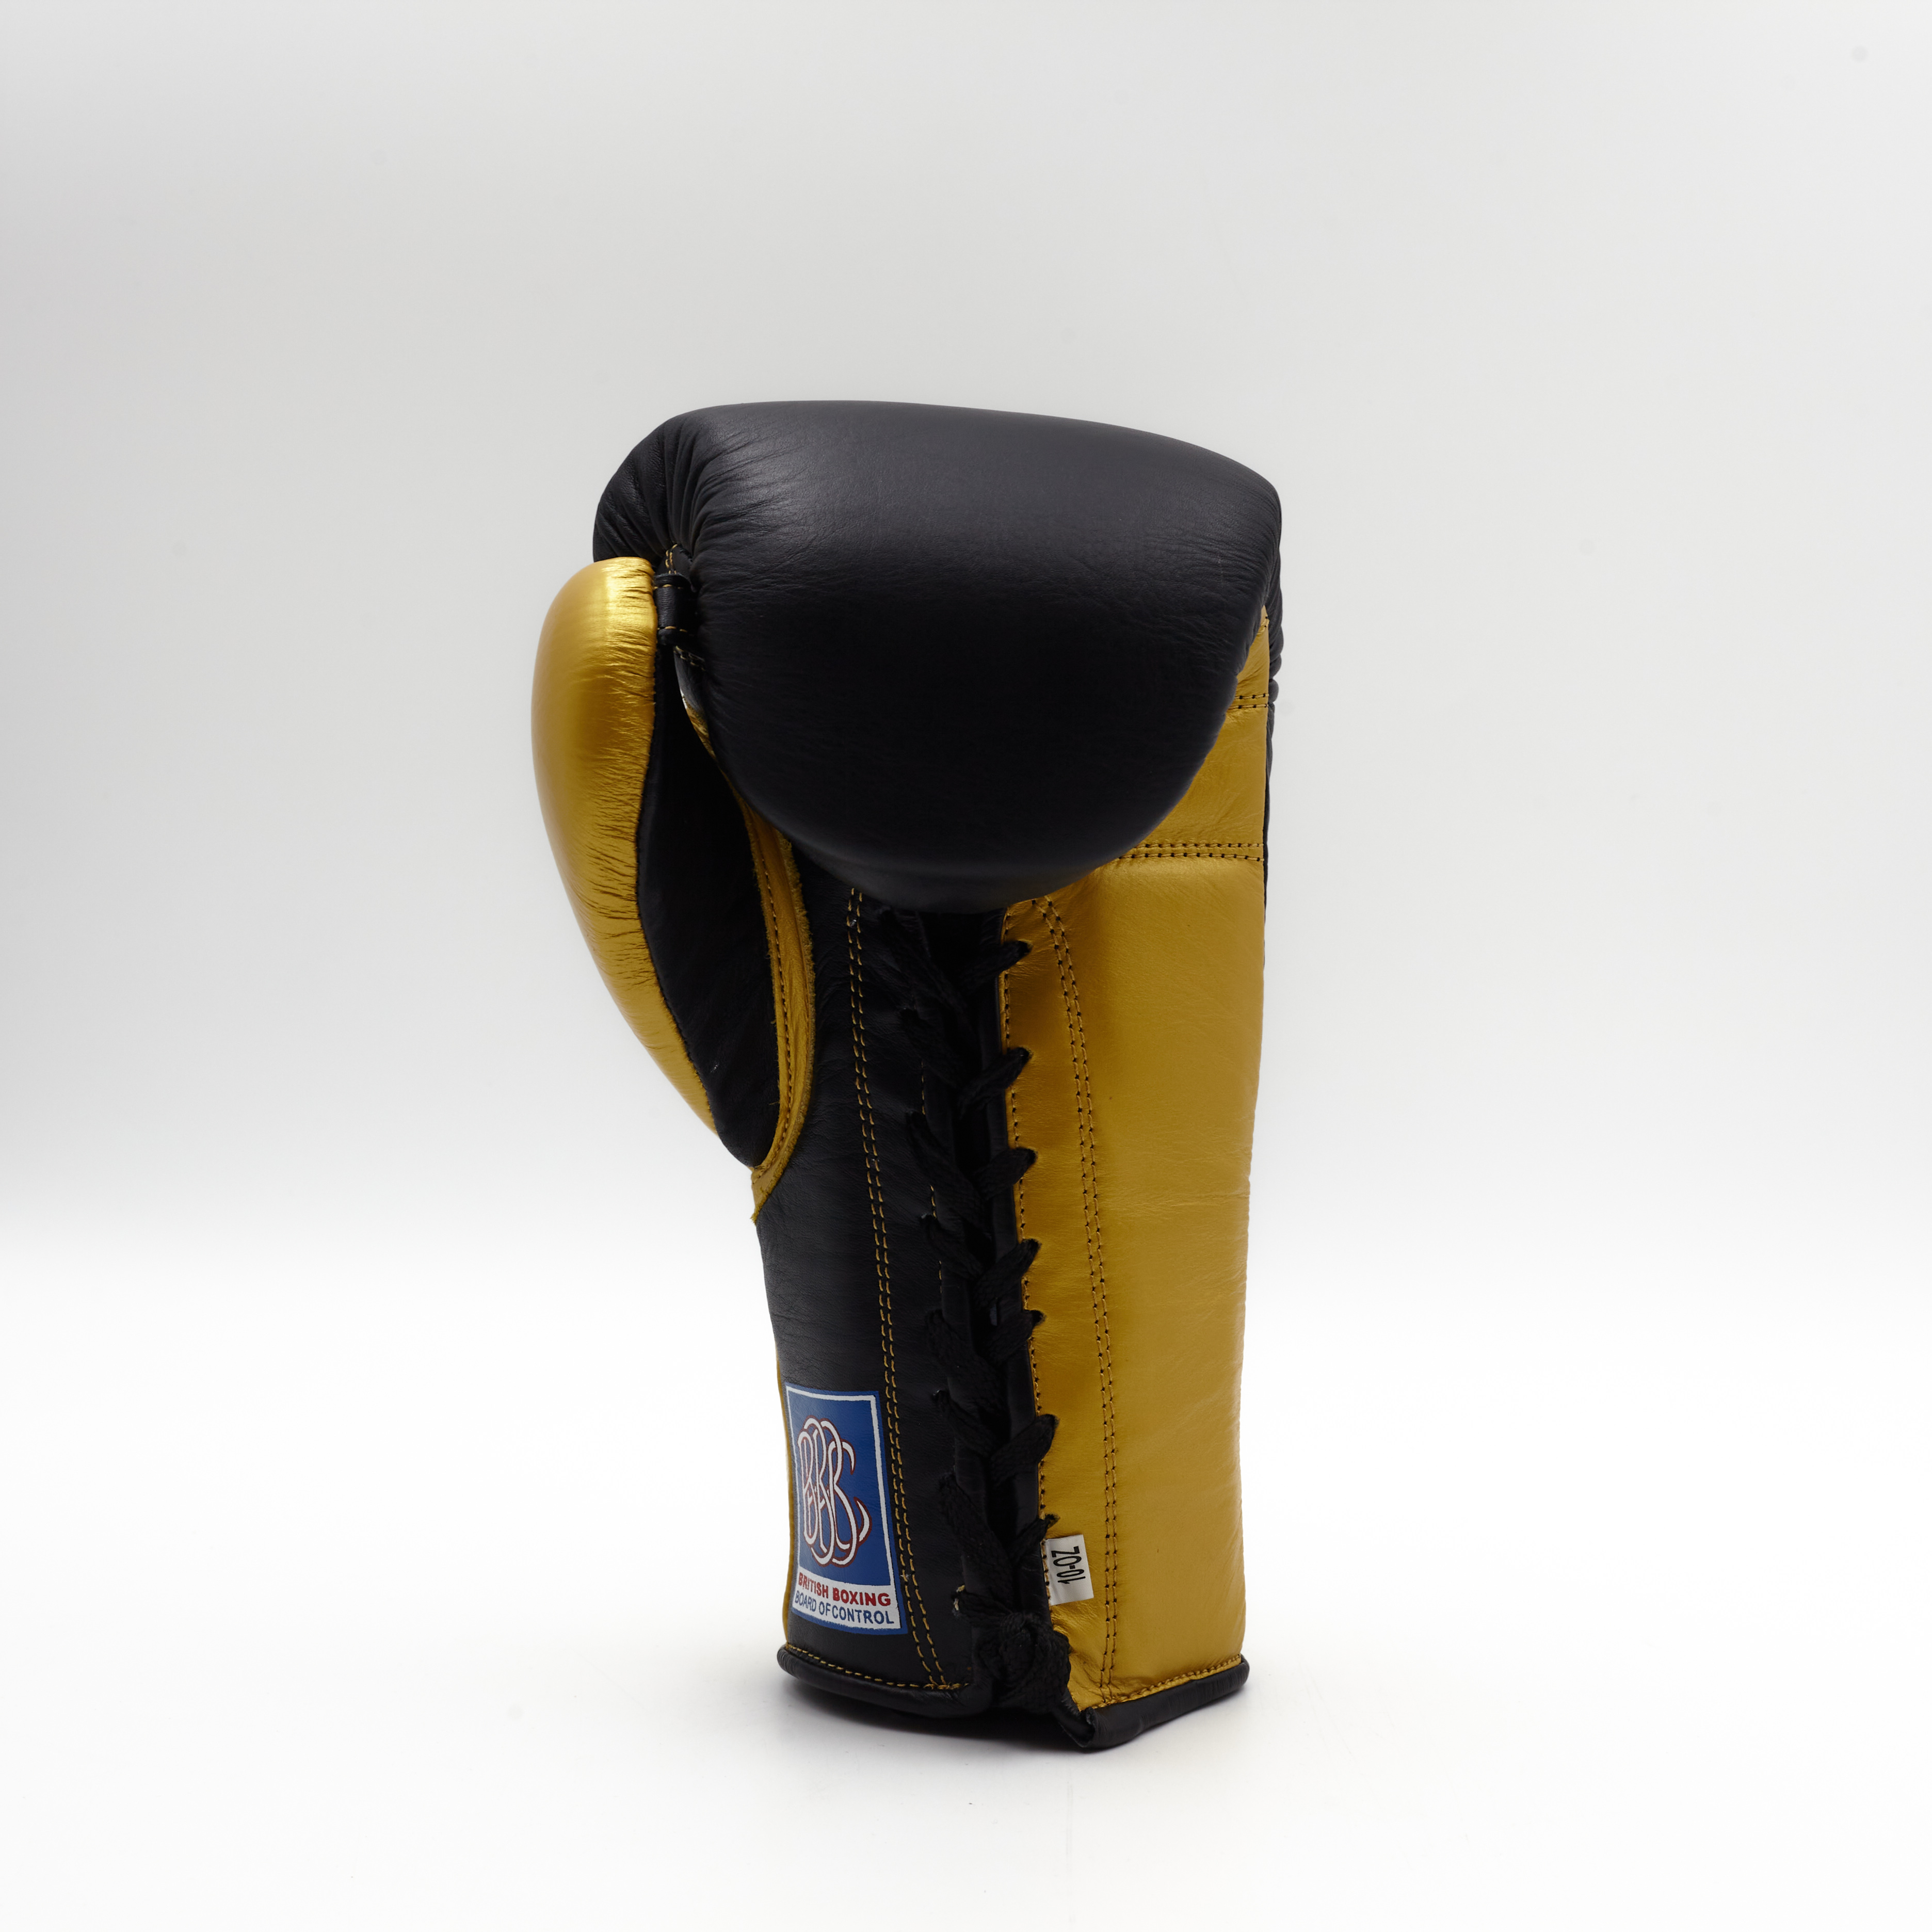 Ringside Boxing UK Pro Contest Glove RS2 Black/Gold  